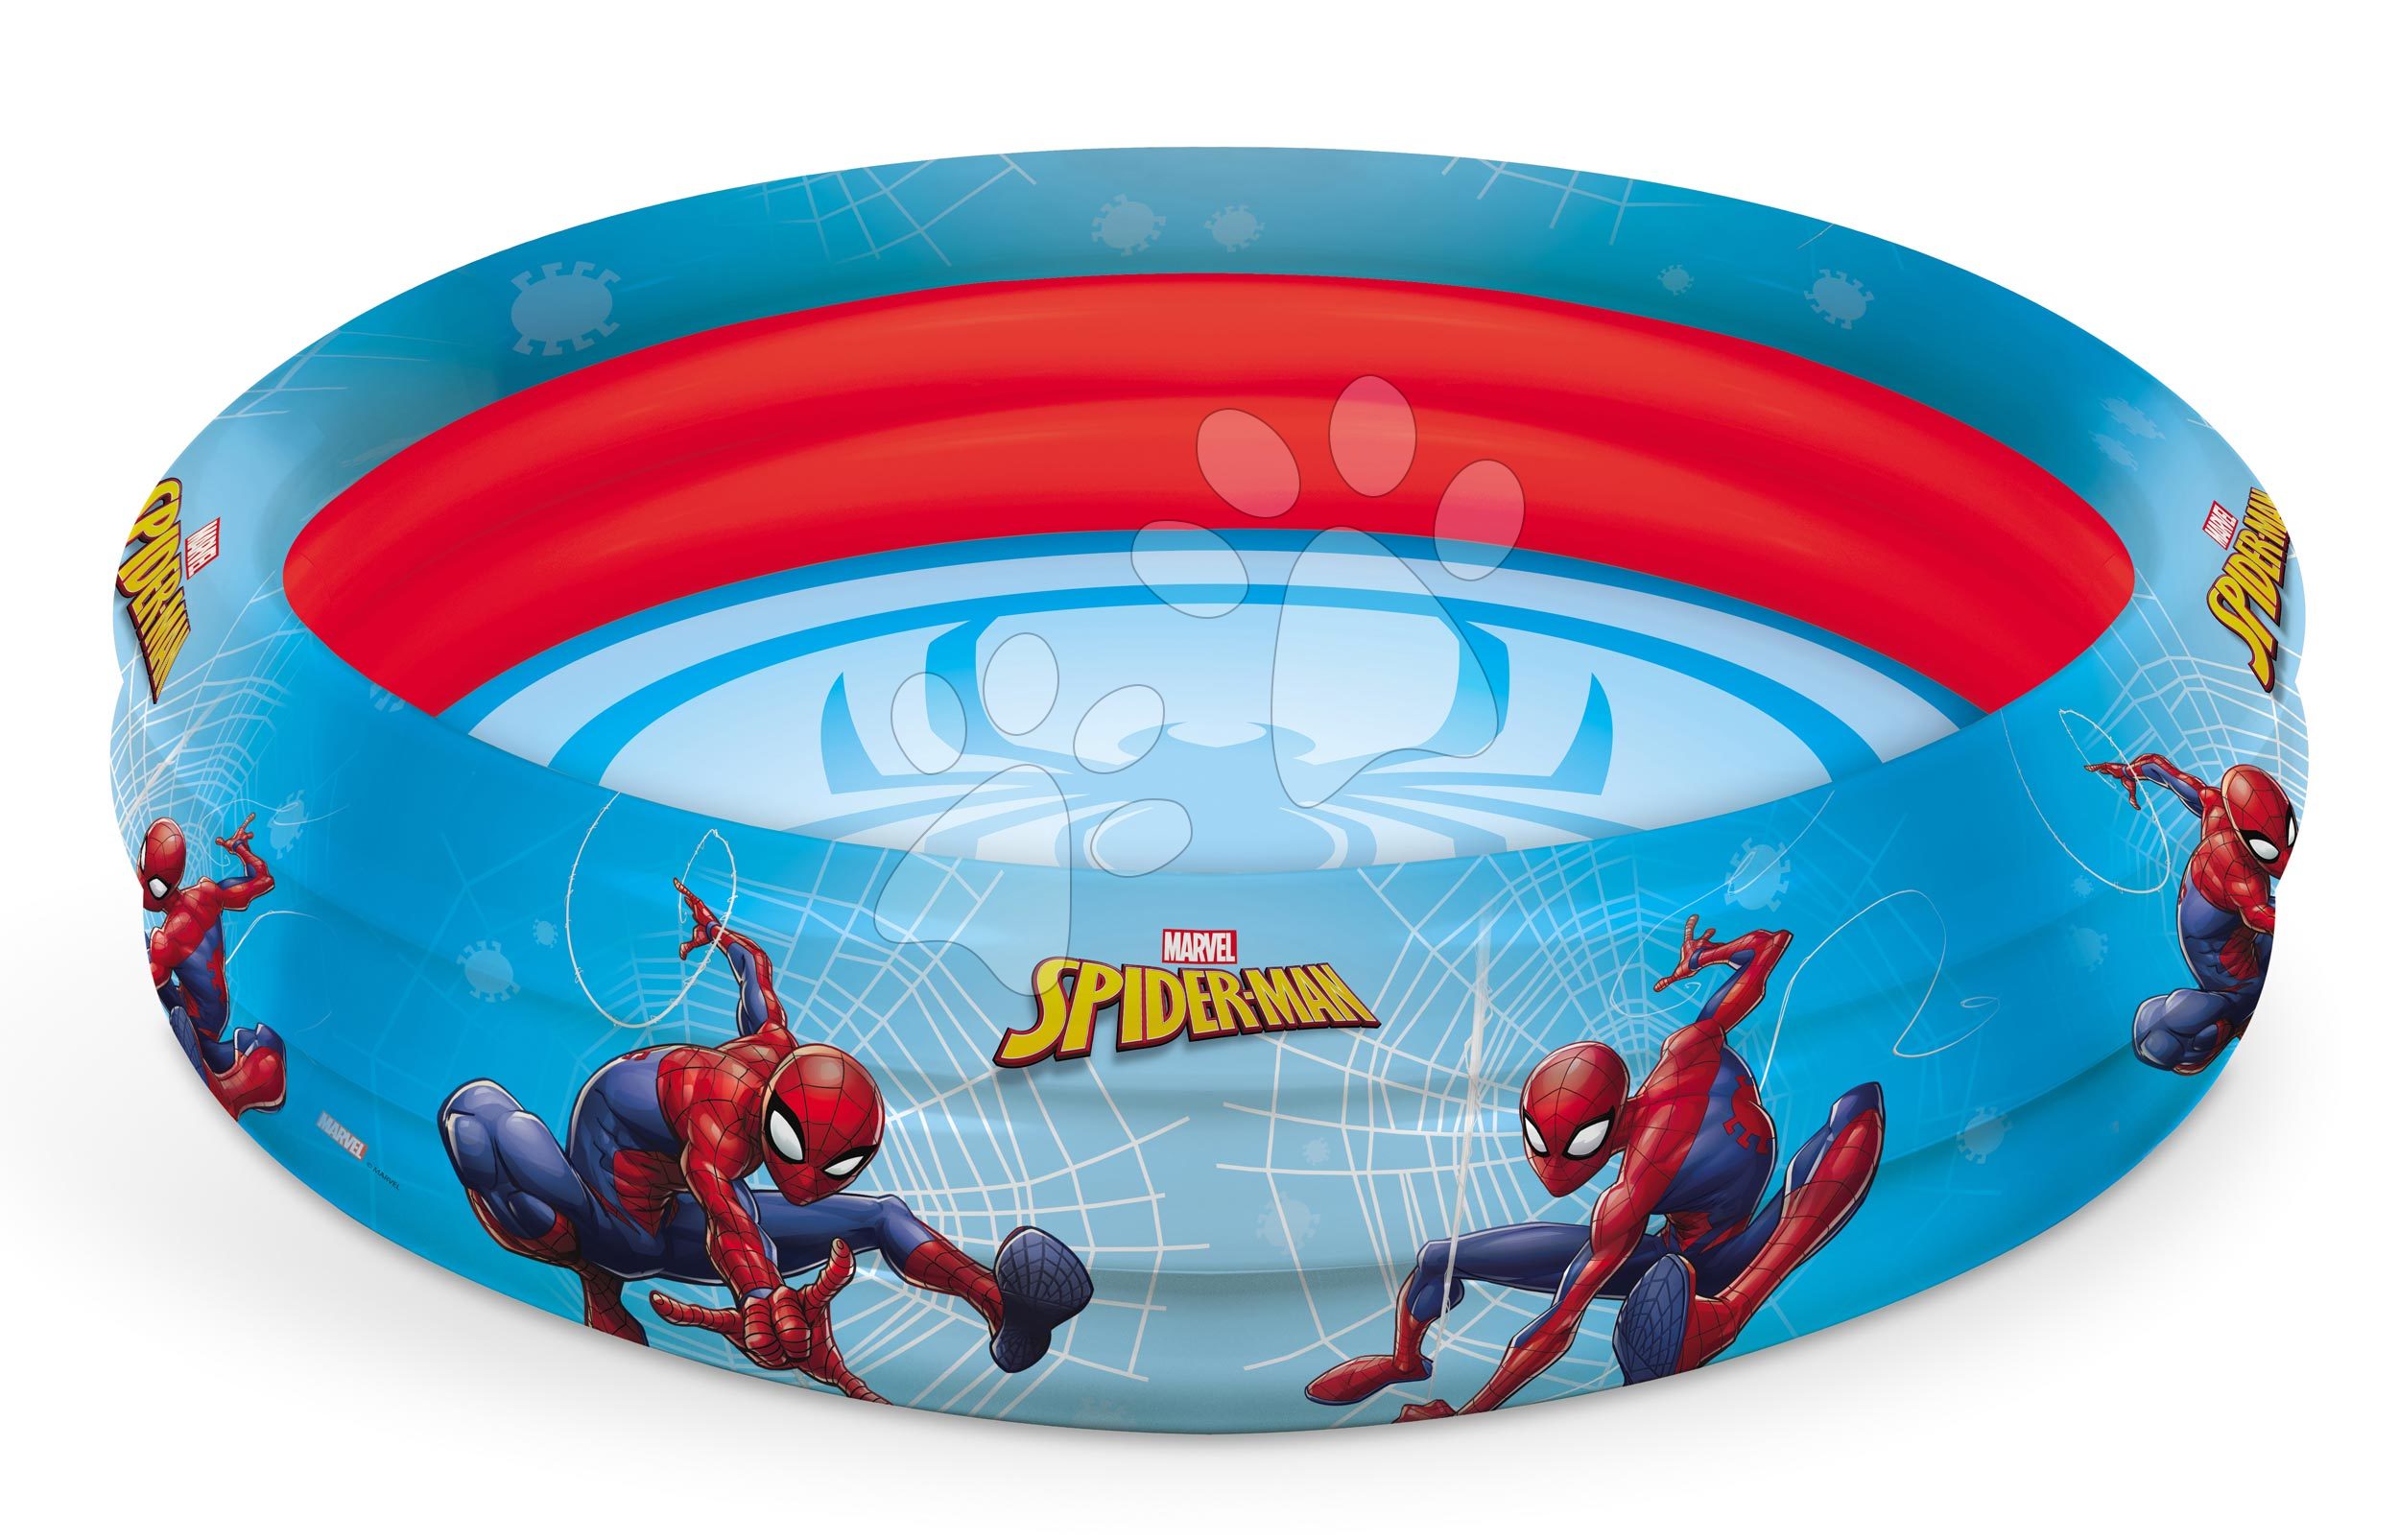 Mondo tříkomorový nafukovací bazén Spiderman 100 cm 16345 červený